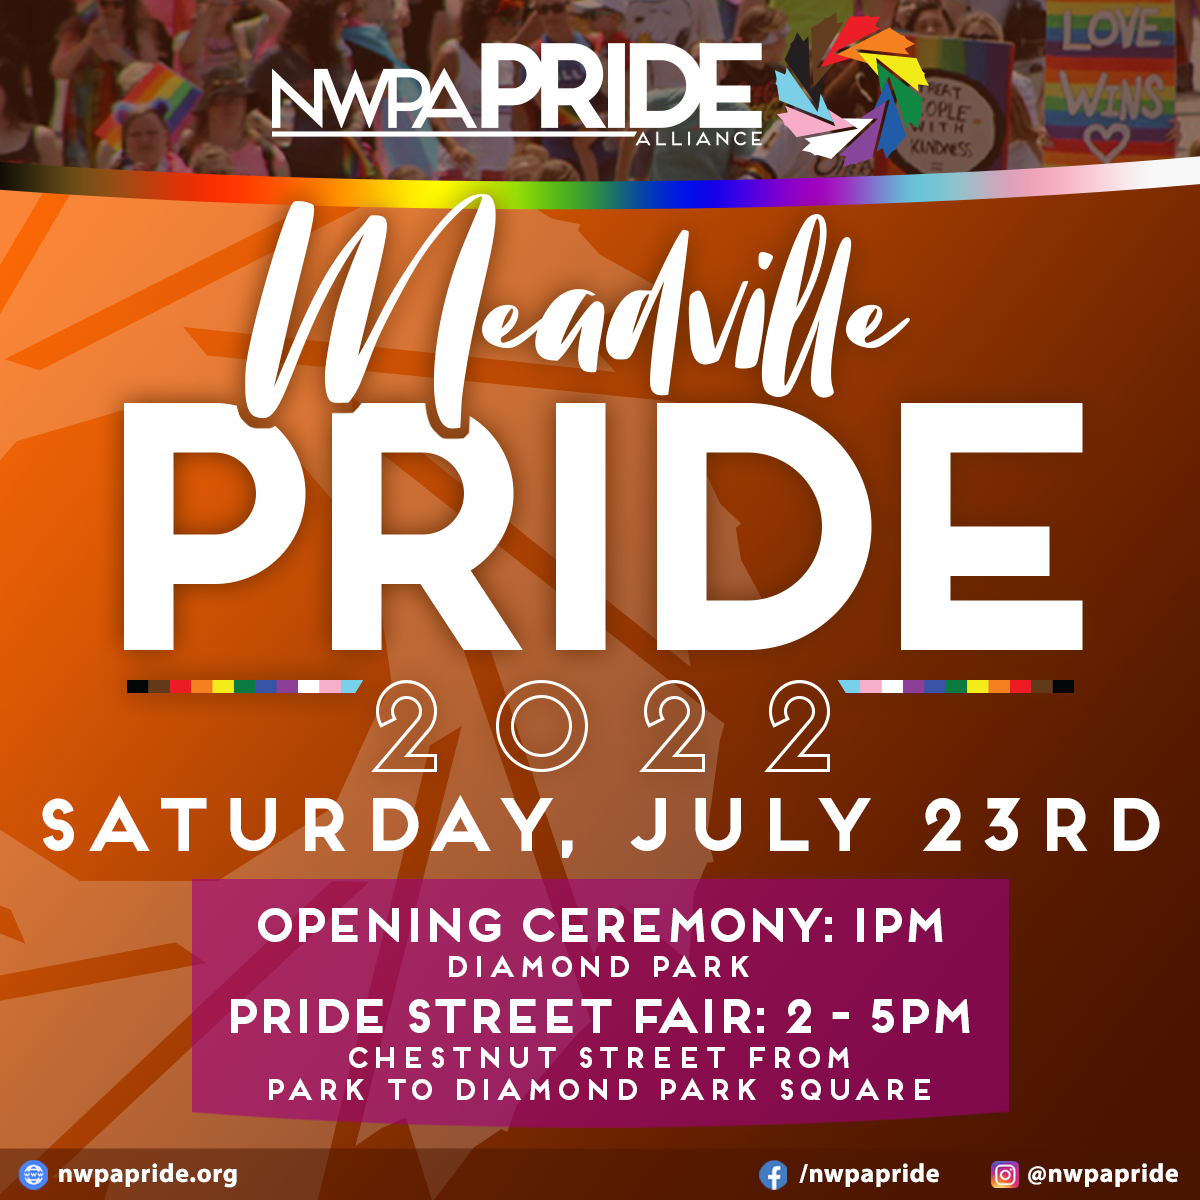 Meadville Pride 2022 NWPA Pride Alliance